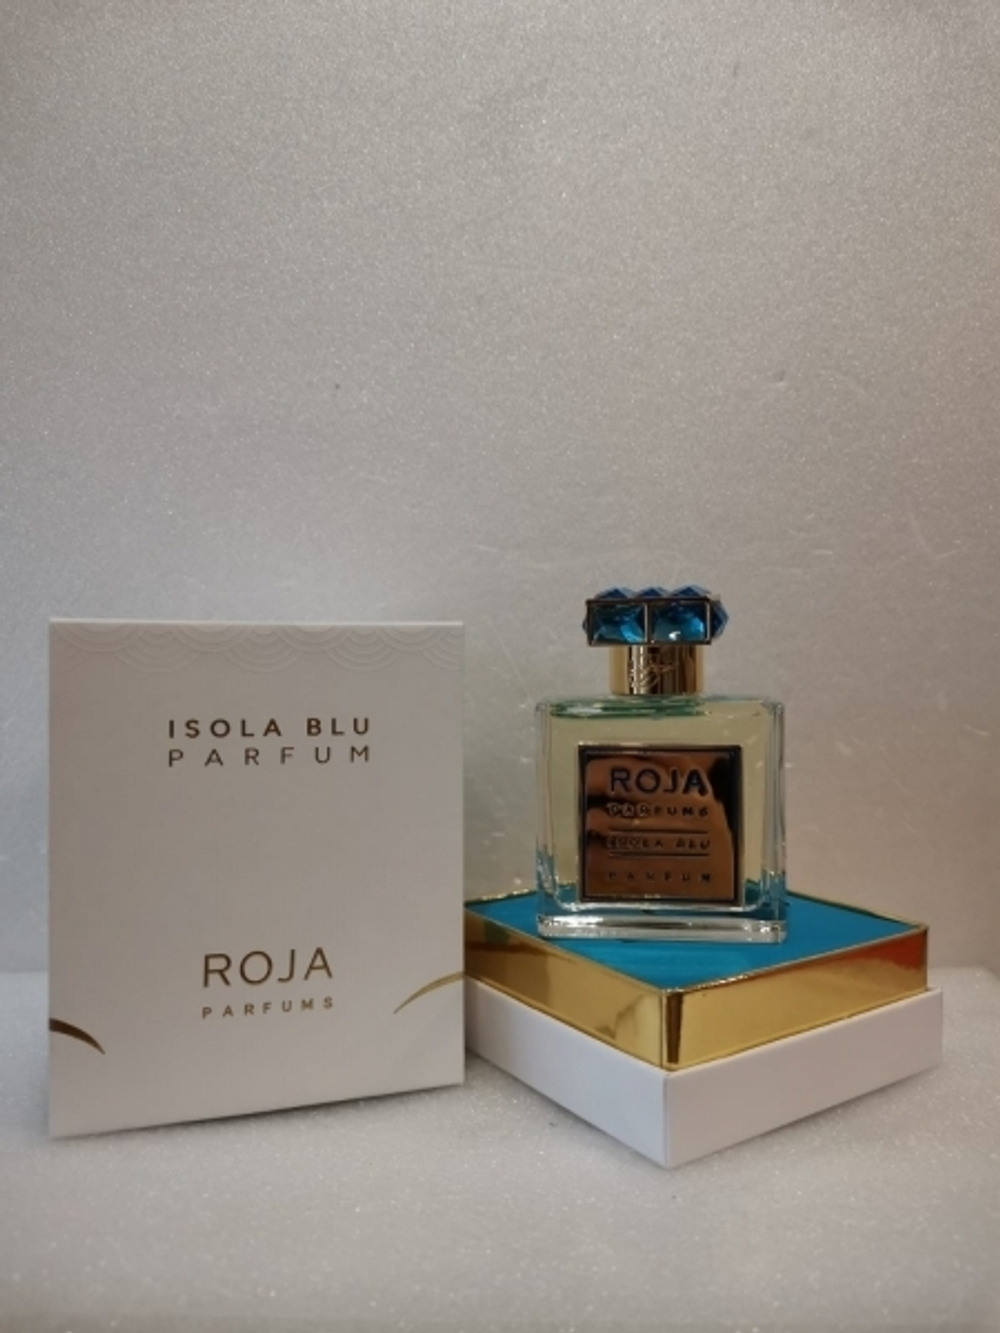 Roja Dove Isola Blu 50 ml (duty free парфюмерия)